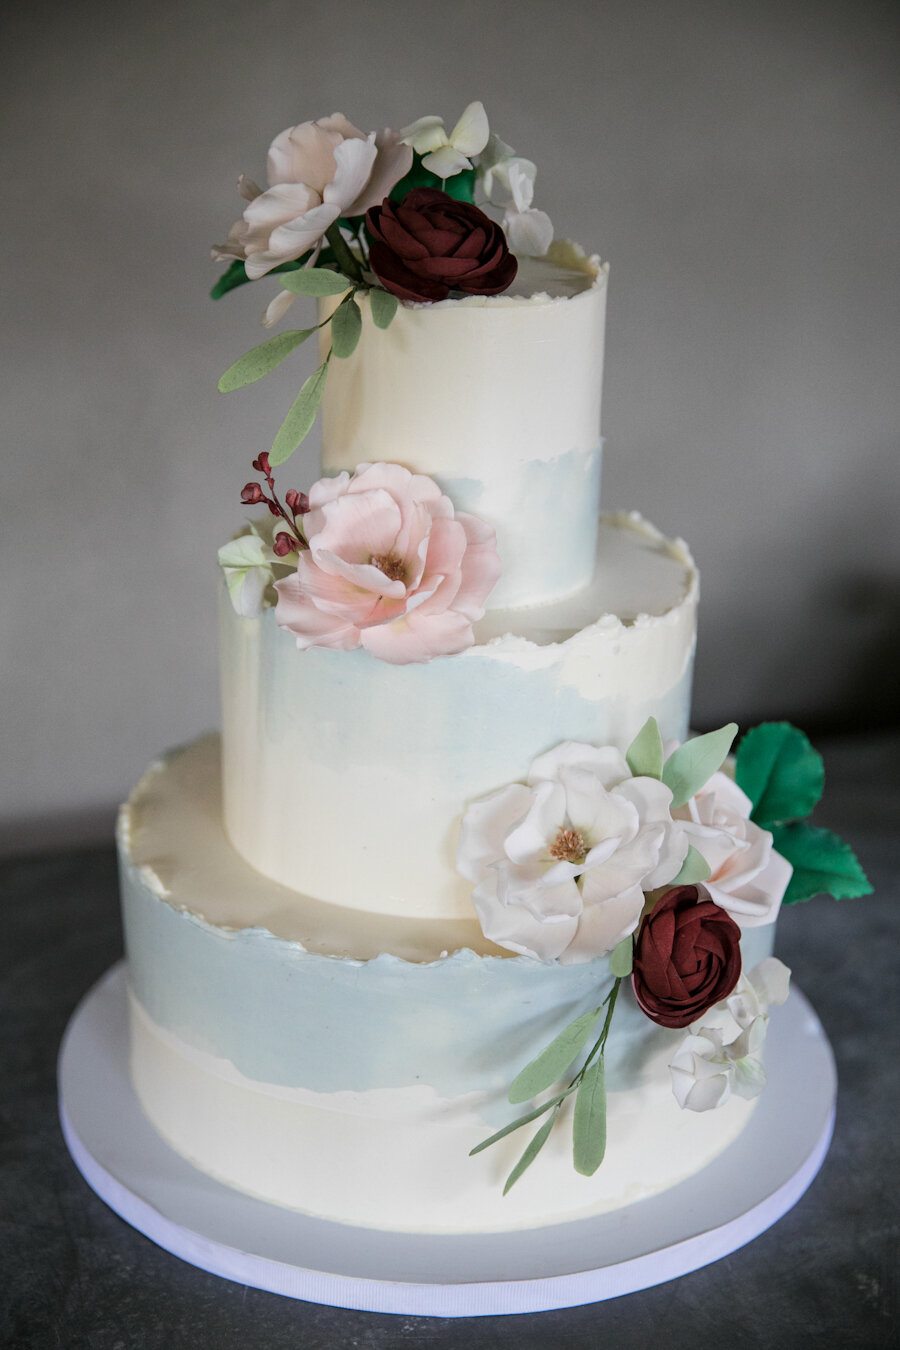 Wedding cake with sugar flowers and ruffled edge